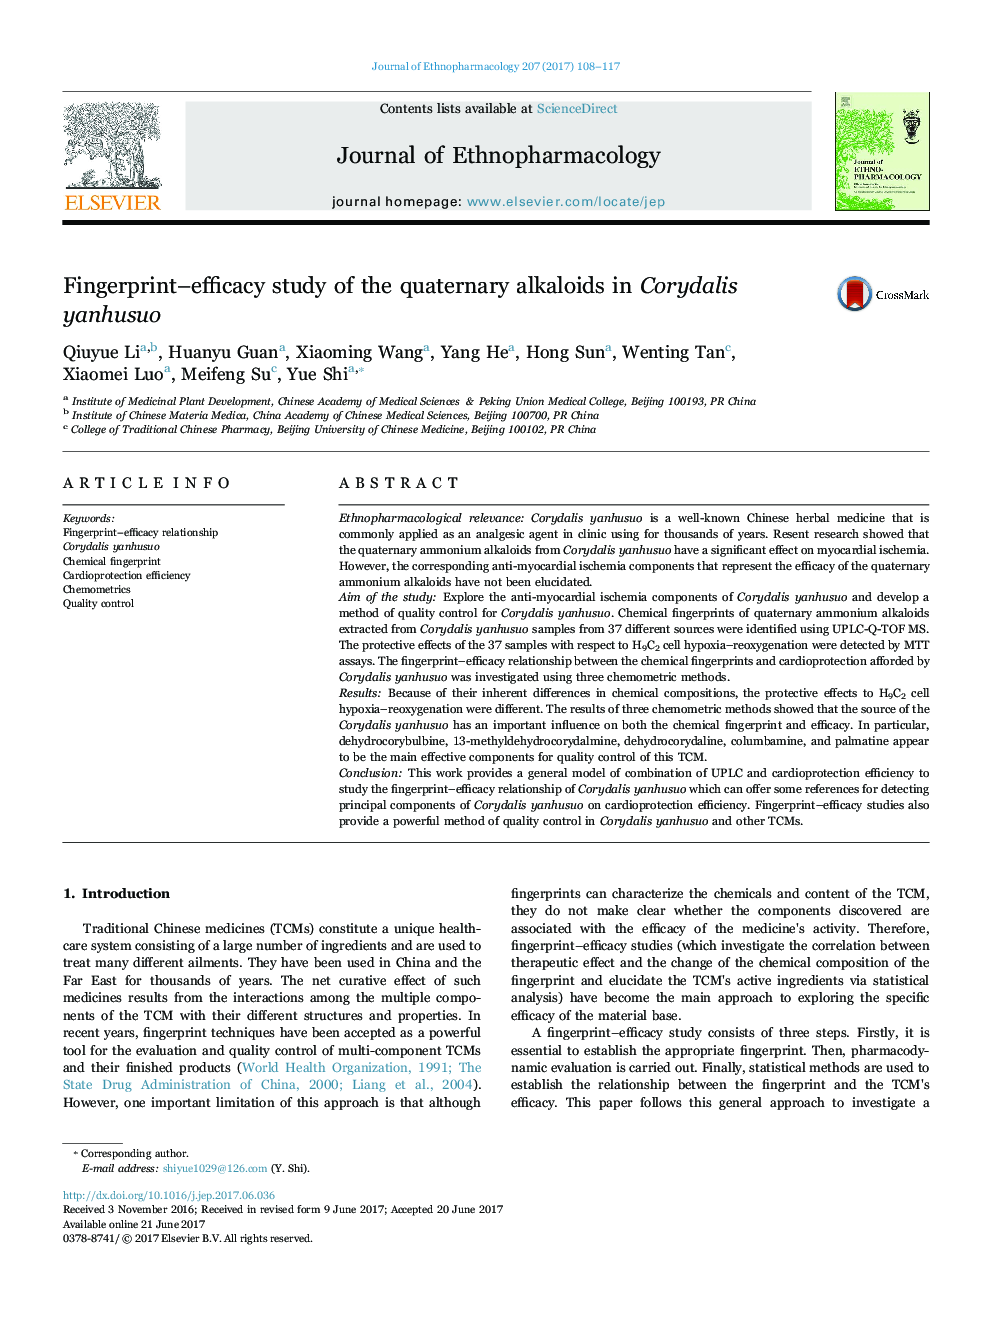 Fingerprint-efficacy study of the quaternary alkaloids in Corydalis yanhusuo